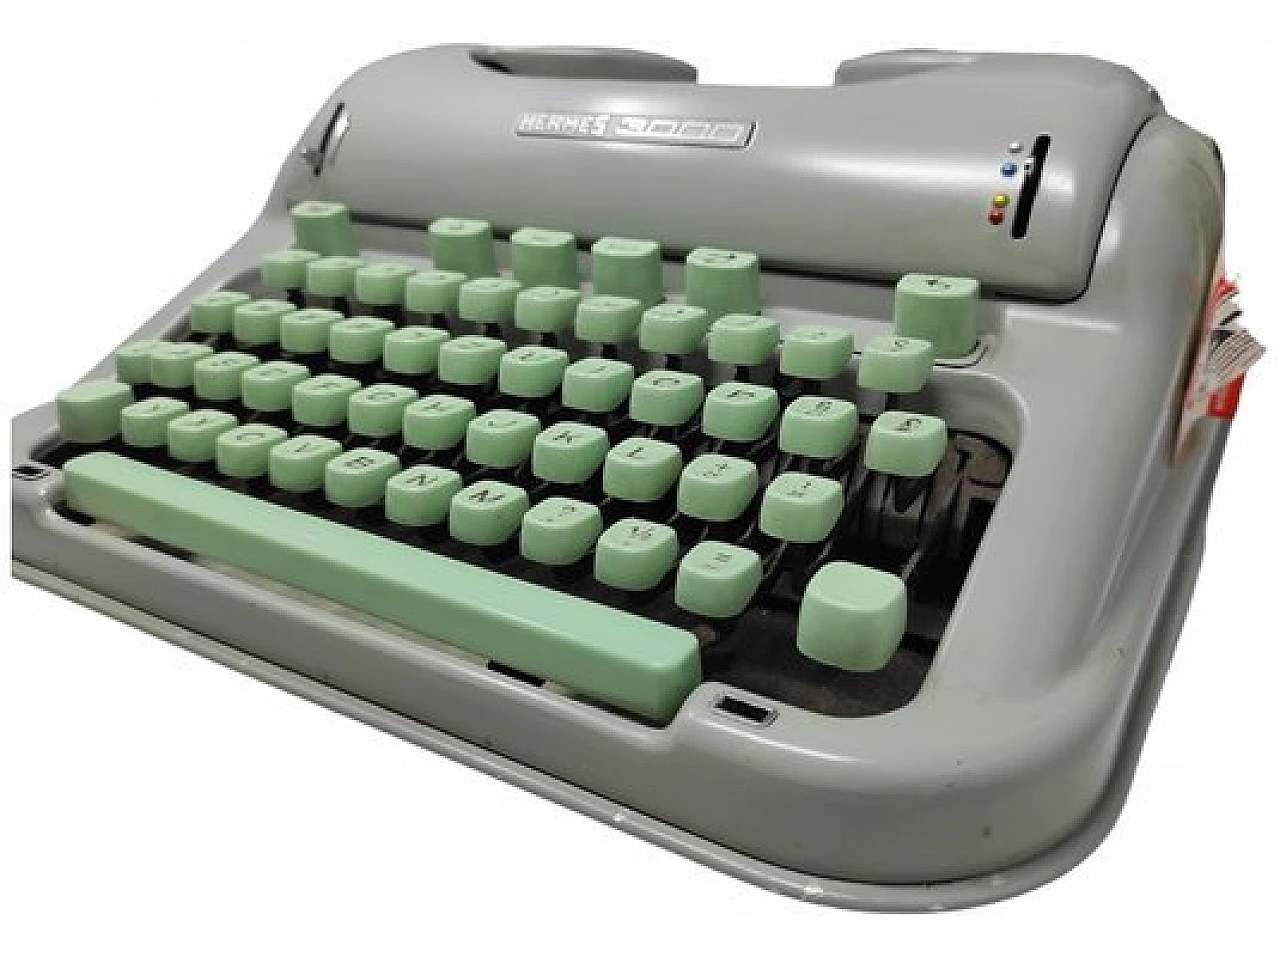 Hermes 3000 typewriter by Richard Authier for Paillard, 1966 9